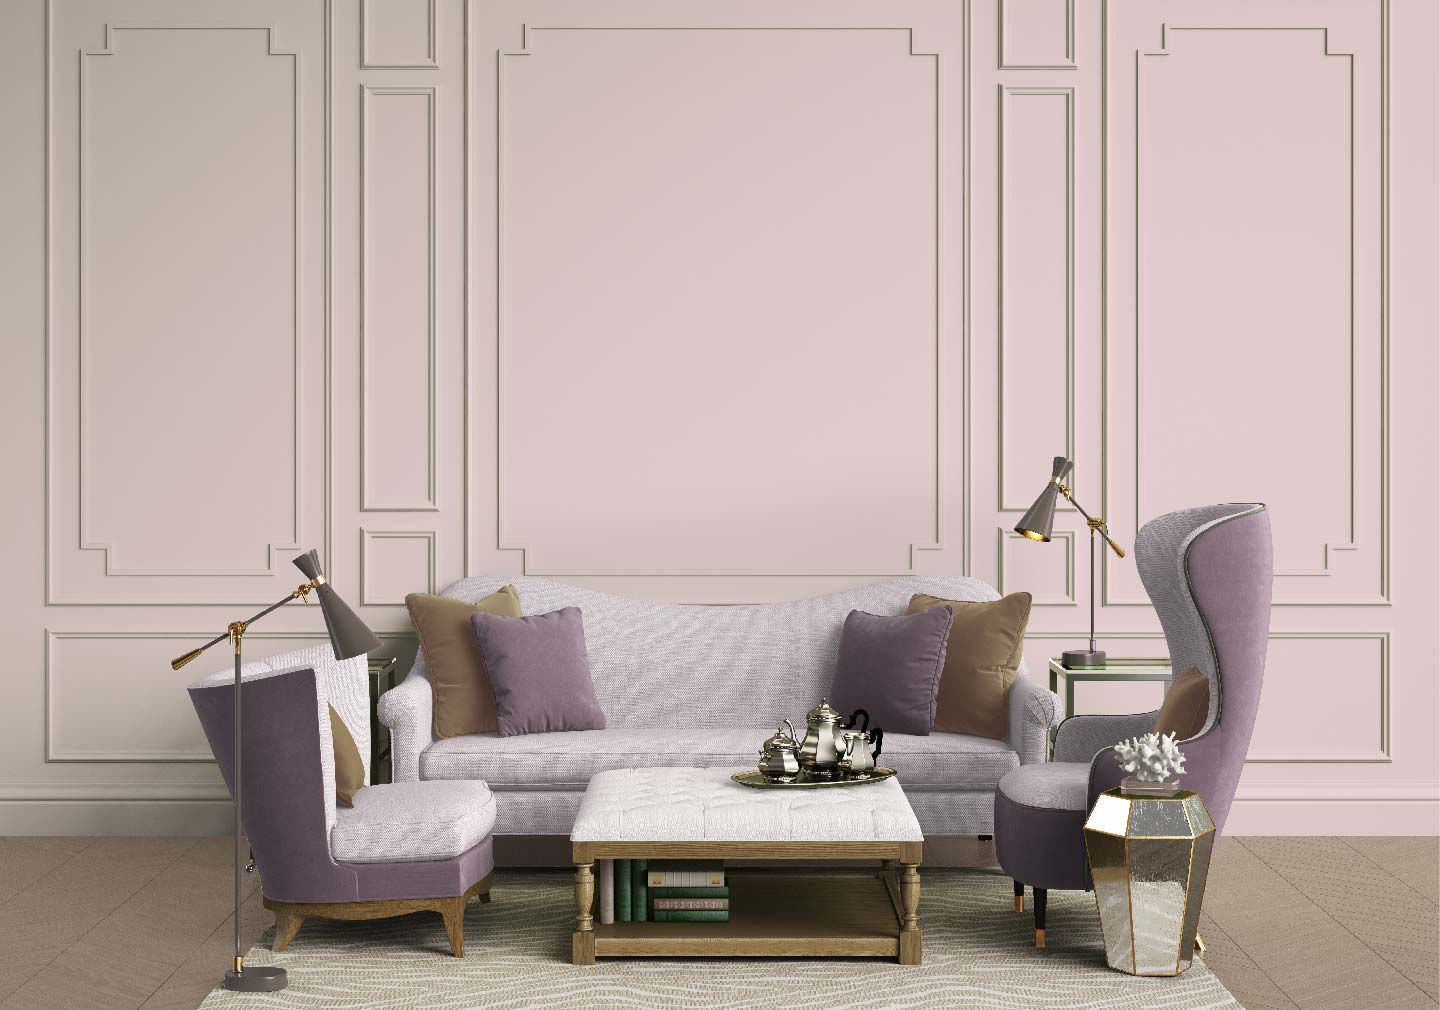  minimalist living room interior design ideas